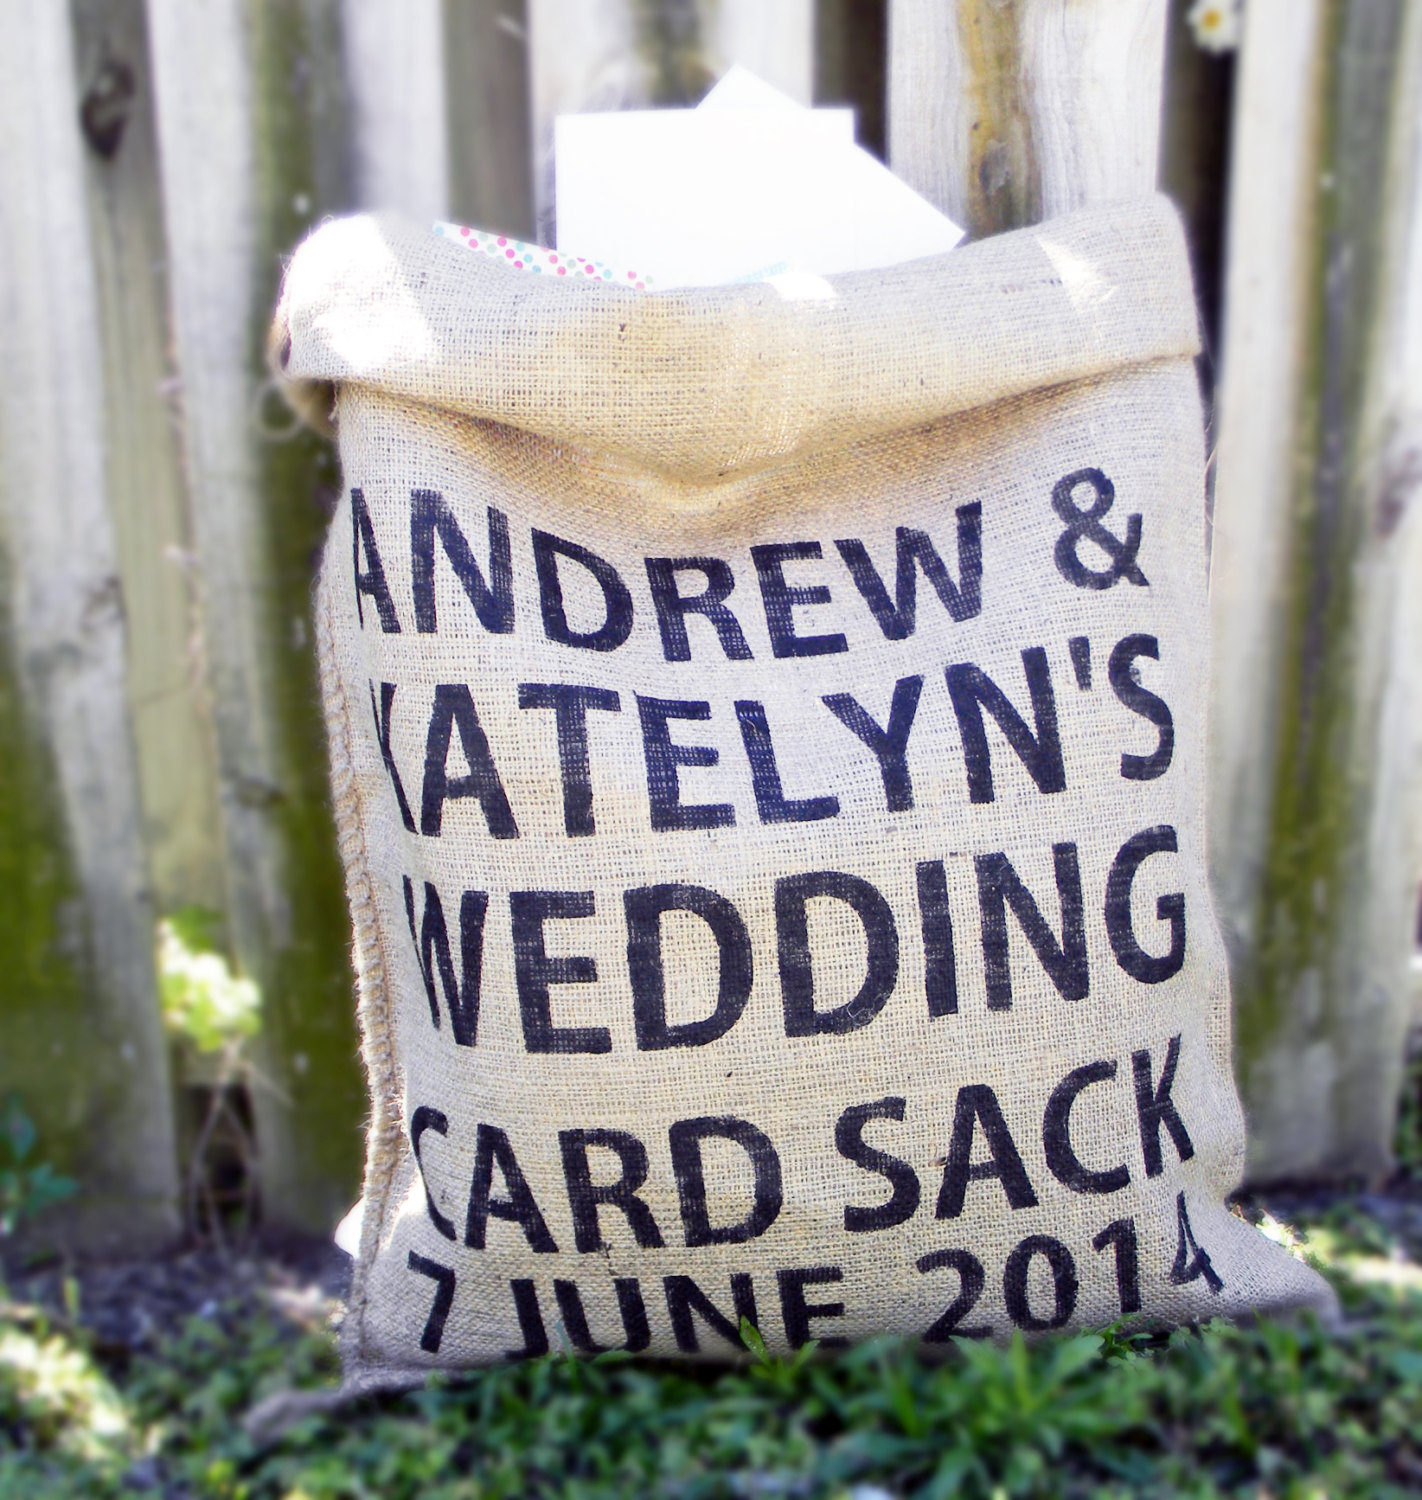 burlap card sack | 50 Best Burlap Wedding Ideas | via https://emmalinebride.com/decor/burlap-wedding-ideas/